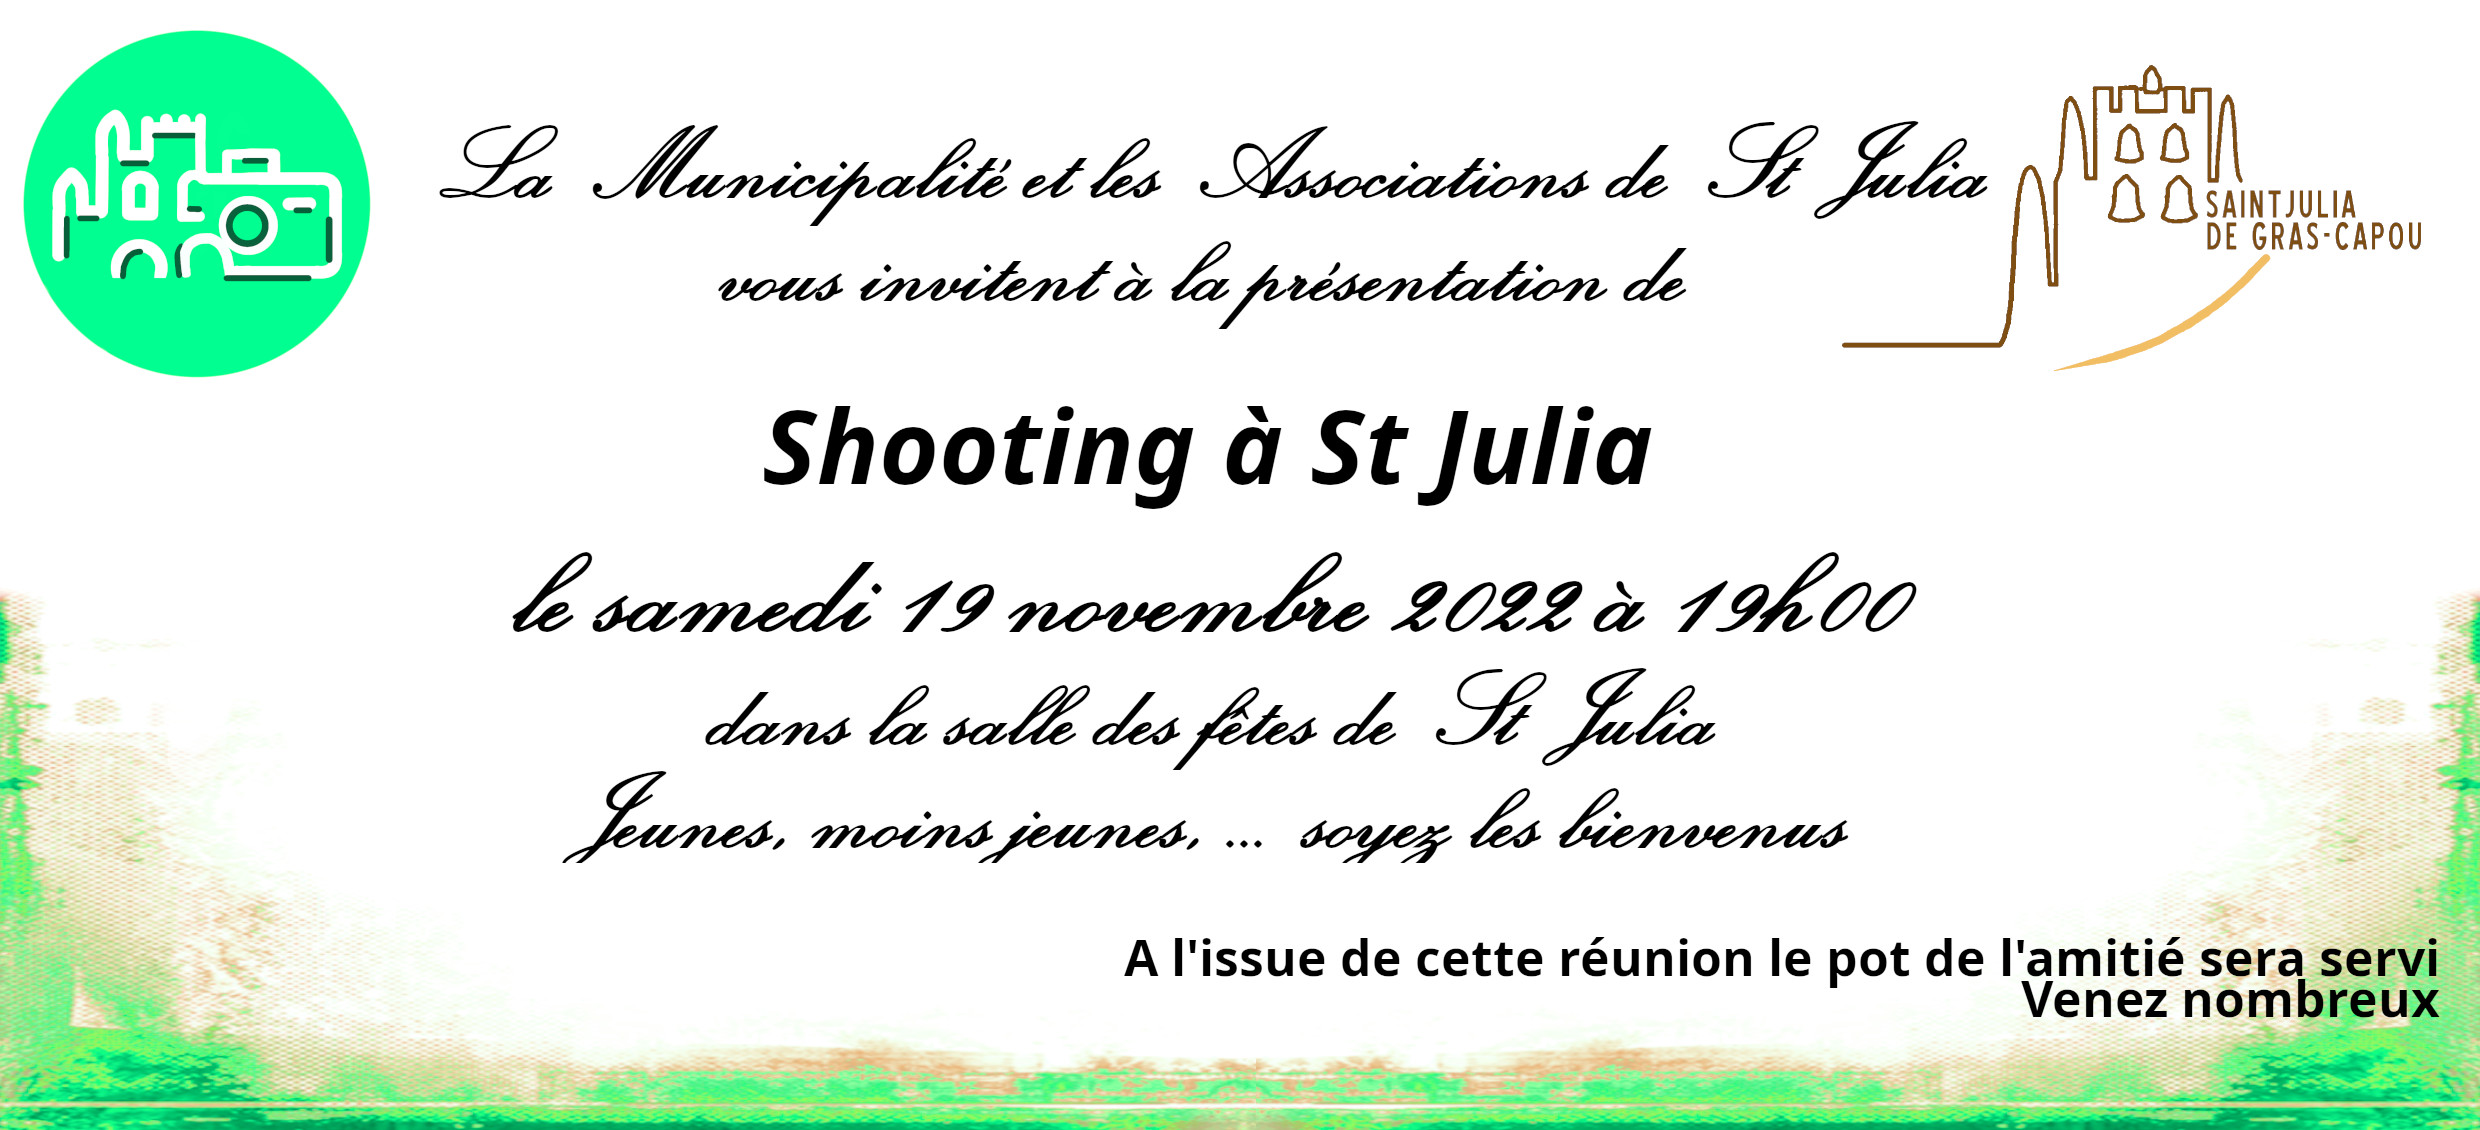 stjulia_20221129_capounets_shooting_flyer.jpg